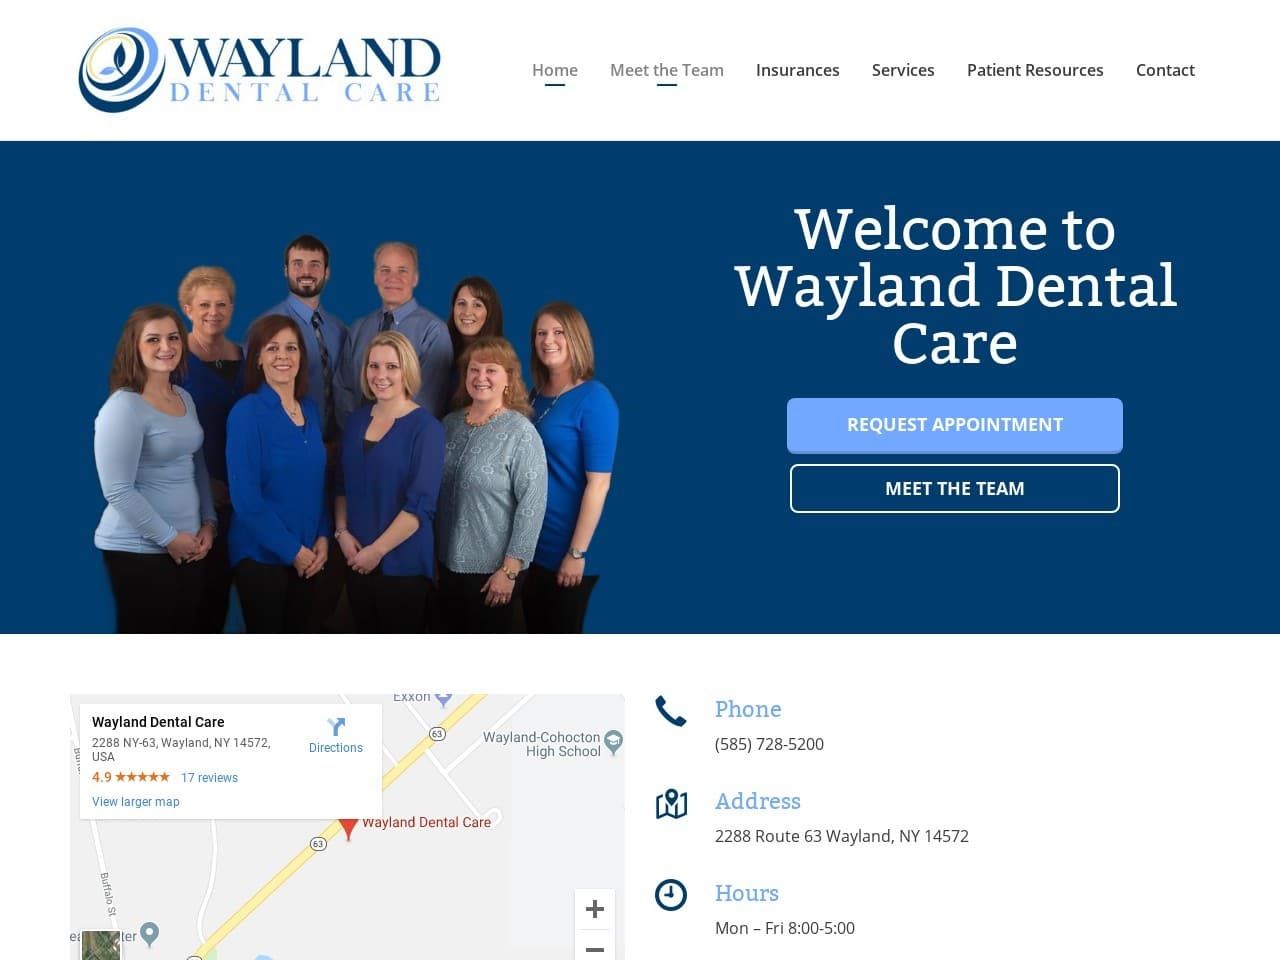 Wayland Dental Care Website Screenshot from waylanddentalcare.com